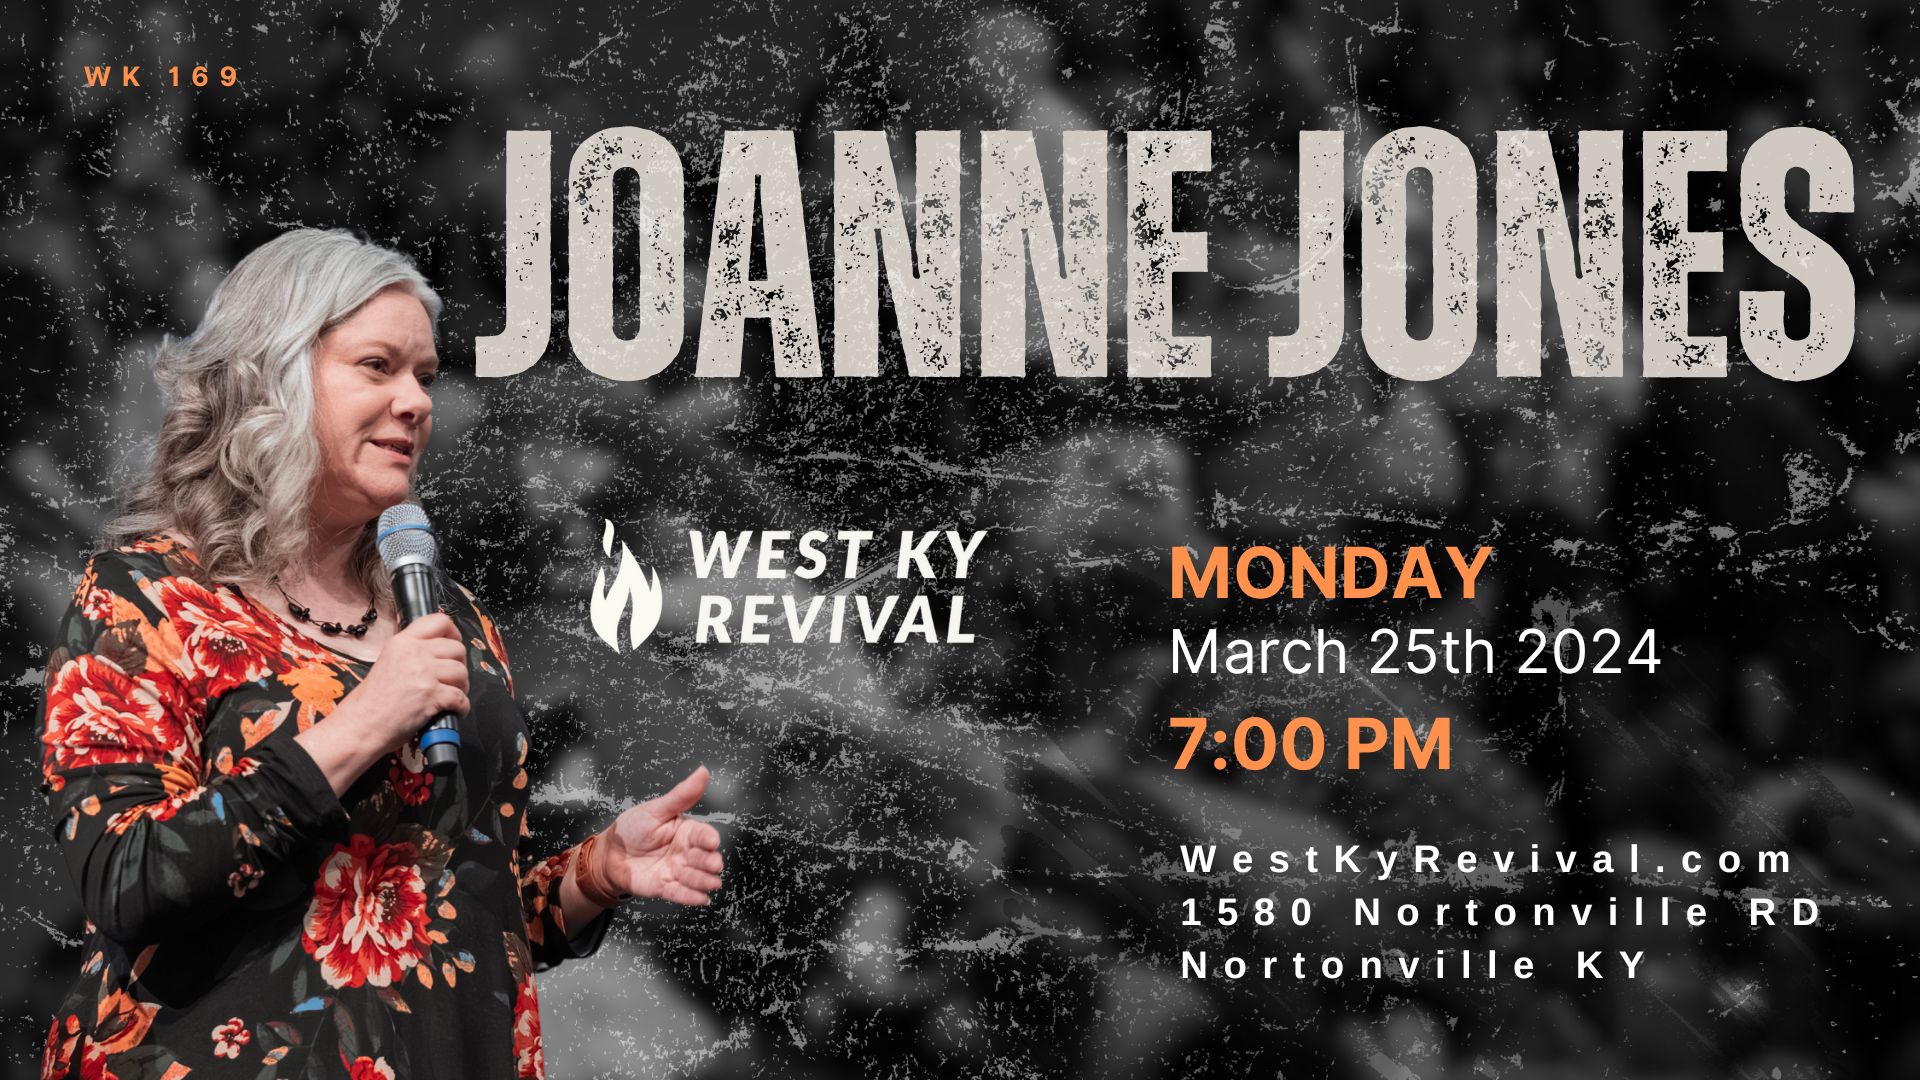 Revival Joanne Jones